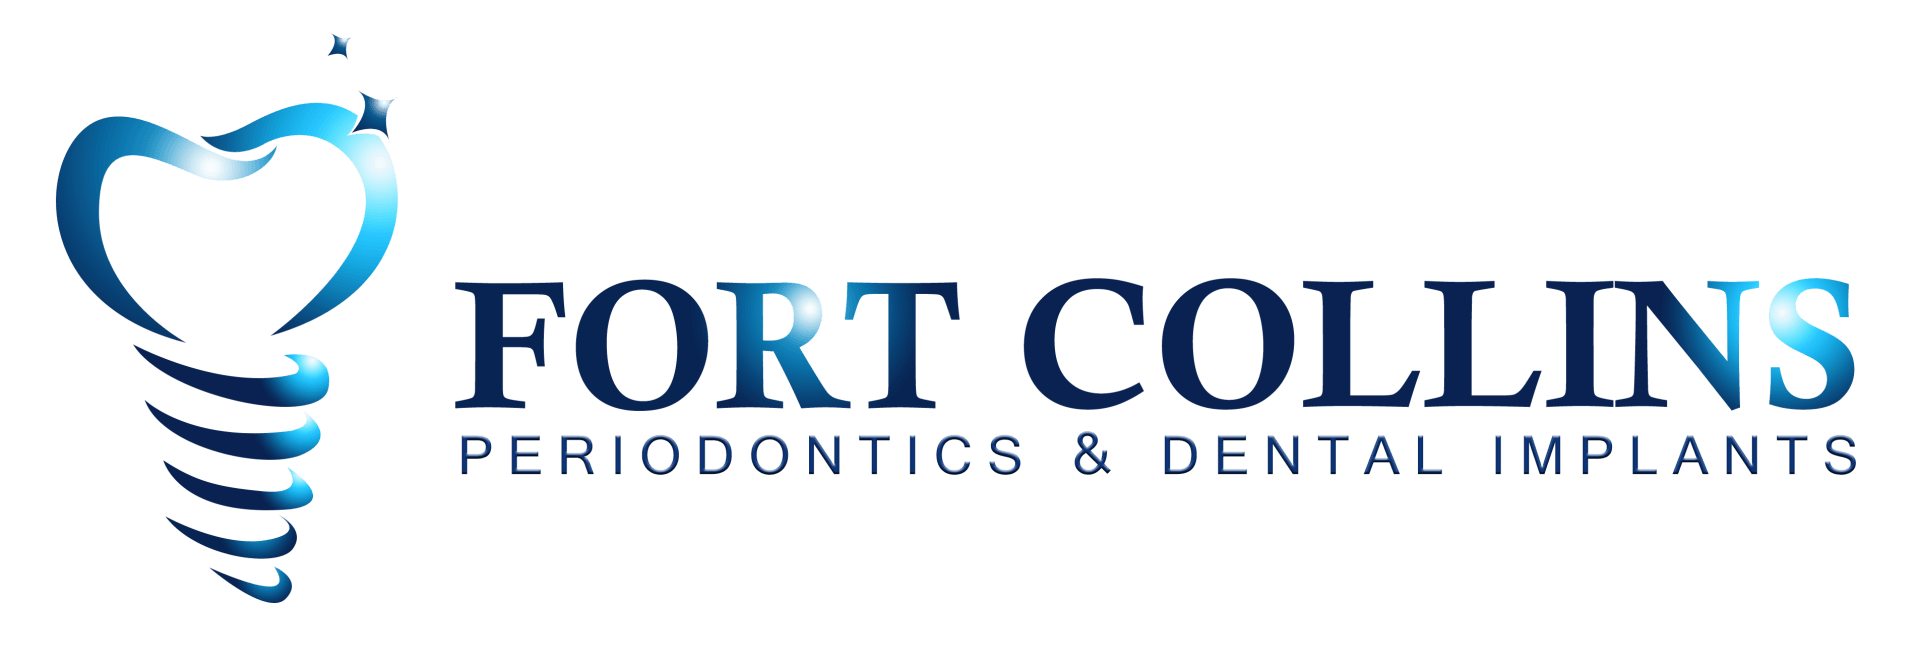 Fort Collins Periodontics and Dental Implants logo